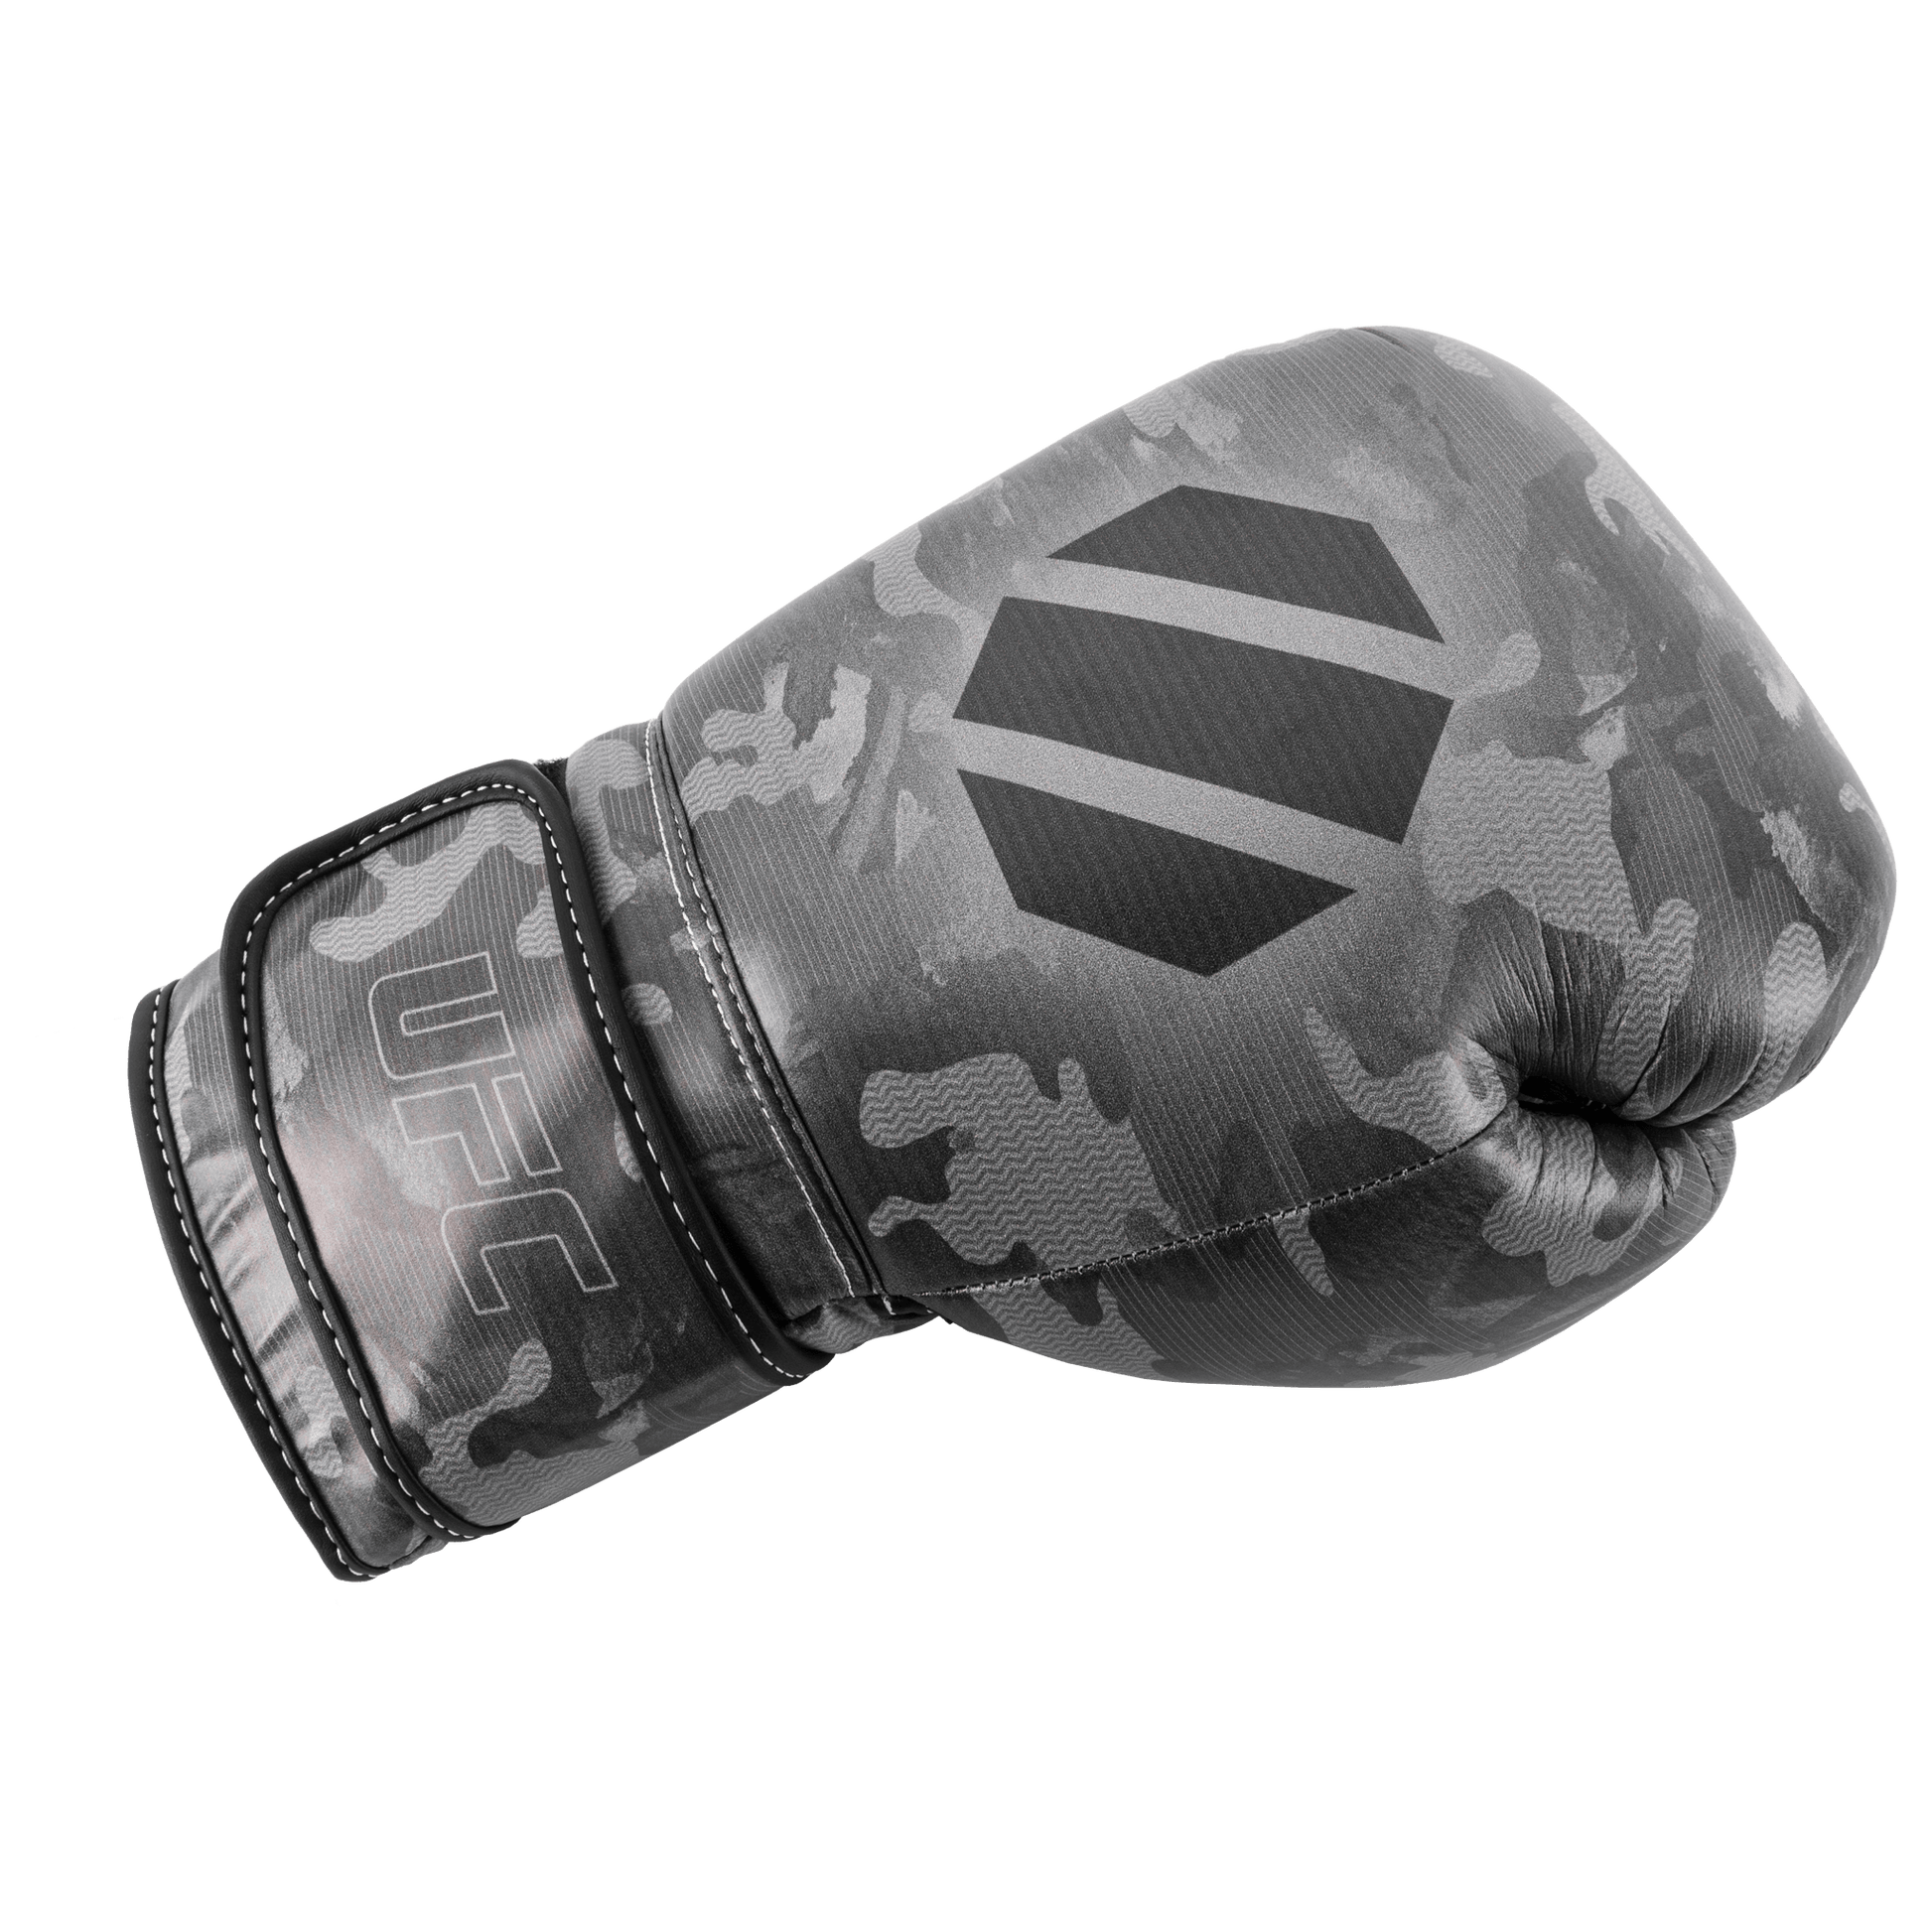 UFC Octagon Camo Bag Gloves - UFC Equipment MMA and Boxing Gear Spirit Combat Sports